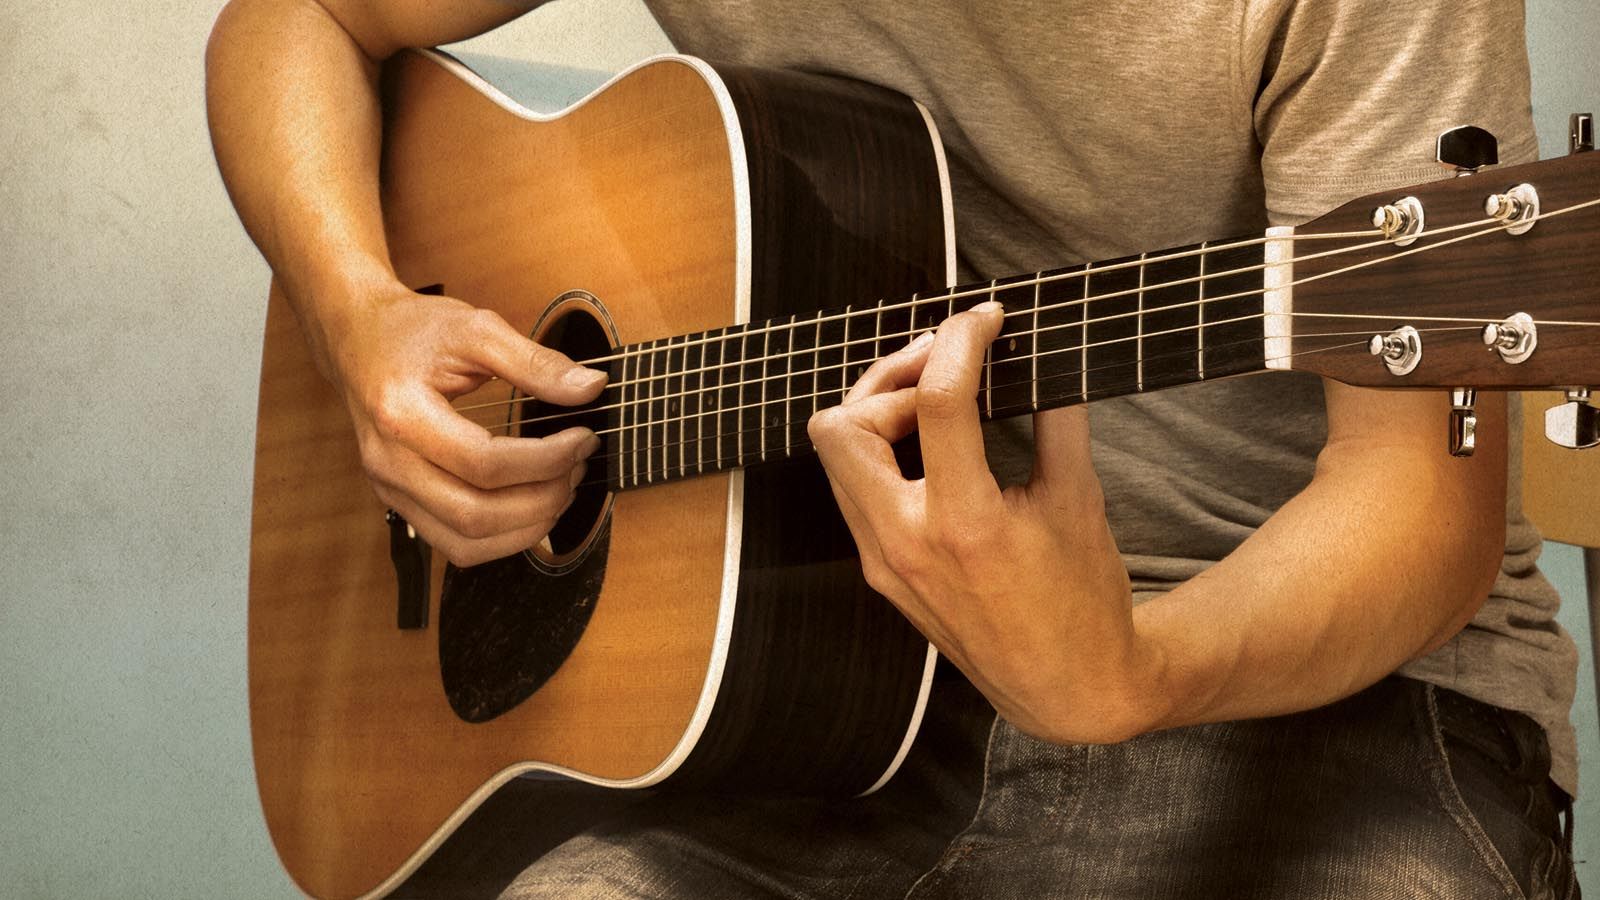 Гитара обучение видео. Игра на гитаре. Хобби гитара. Уроки гитары. Человек играющий на гитаре.